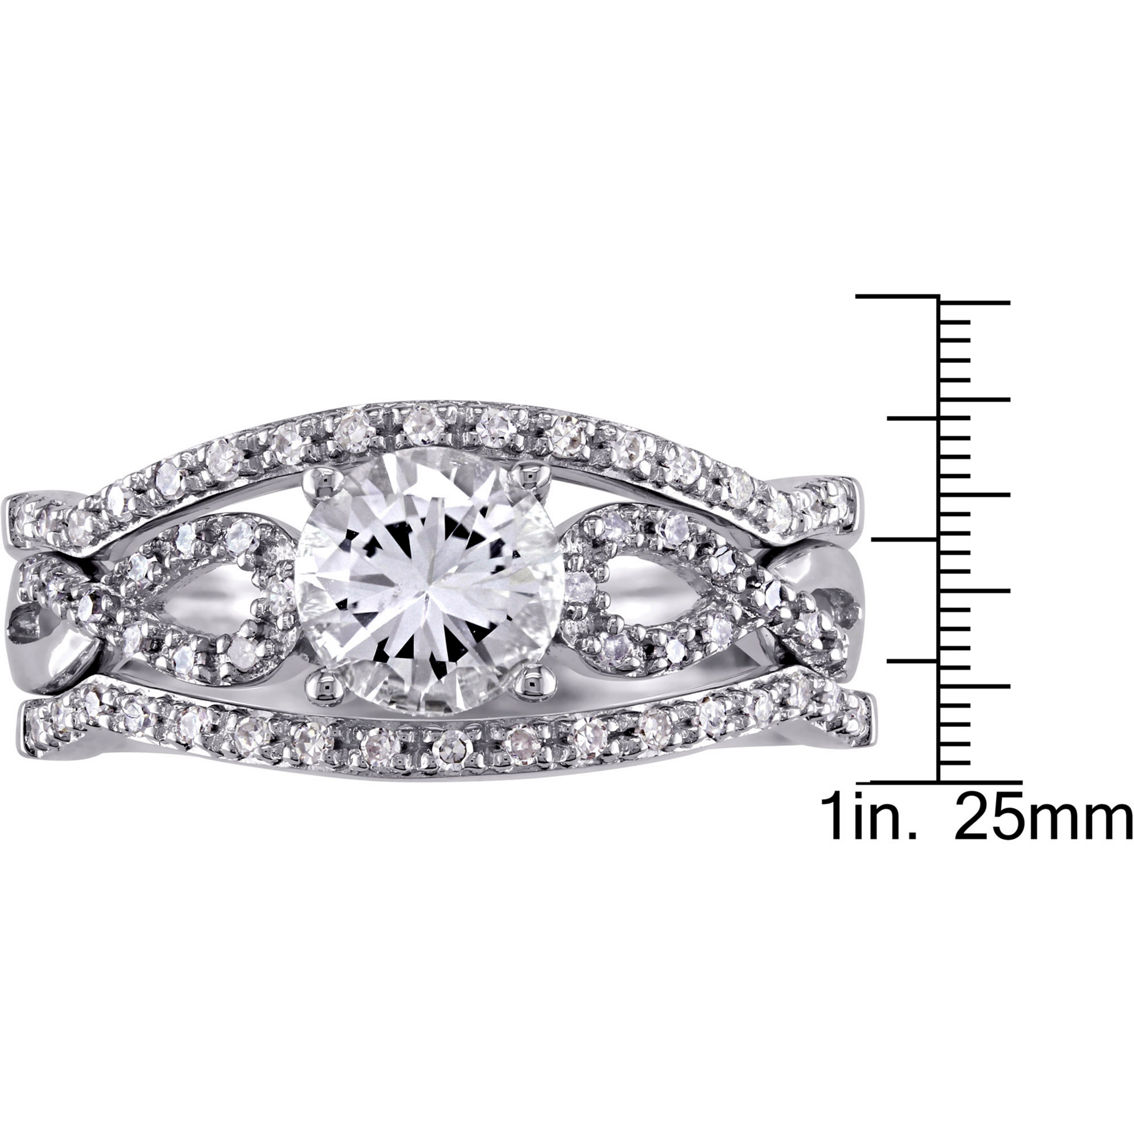 Sofia B. 10k White Gold Created White Sapphire Diamond Infinity 3 pc. Bridal Set - Image 5 of 5